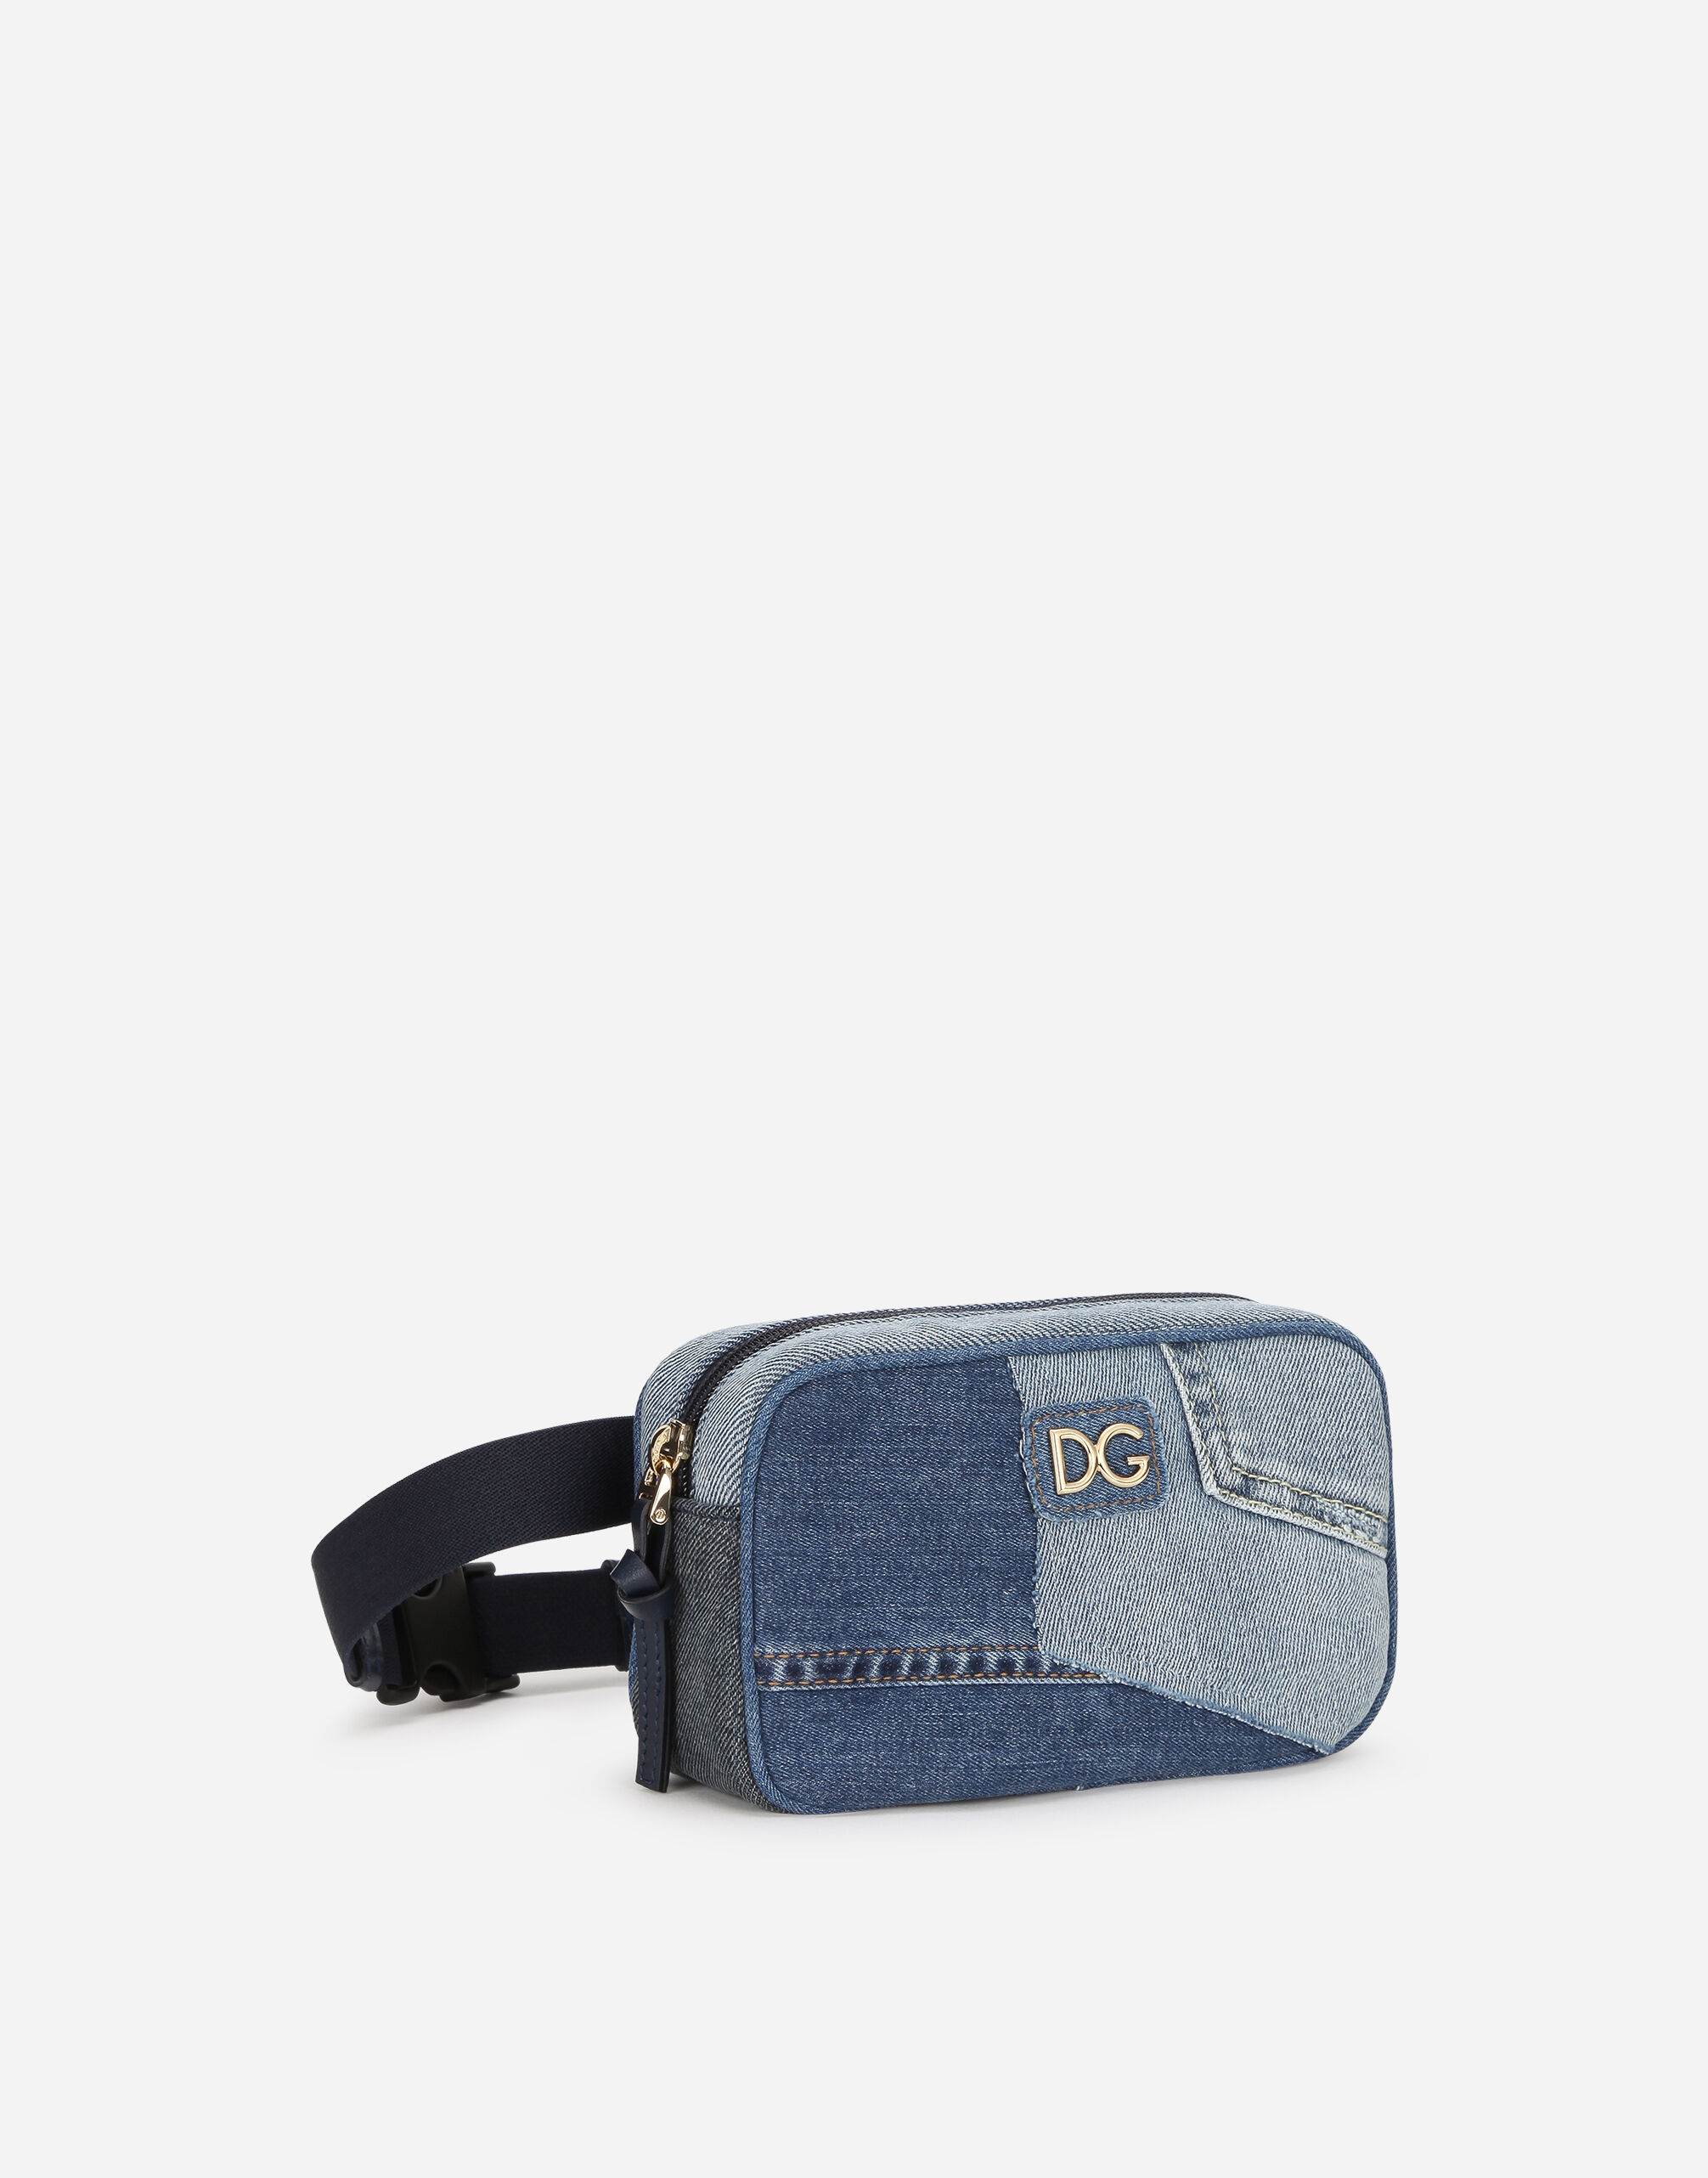 Dolce&Gabbana DG Girls Medium Patchwork Denim Shoulder Bag | Neiman Marcus